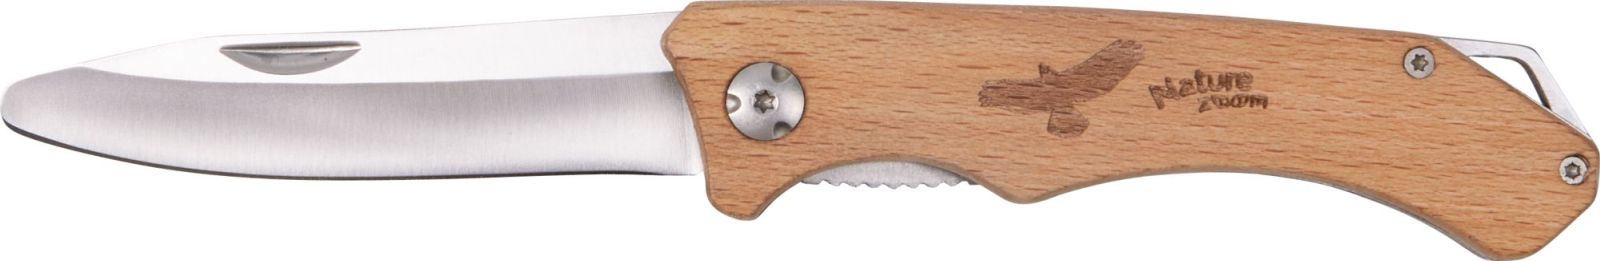 Spiegelburg Folding carving knife